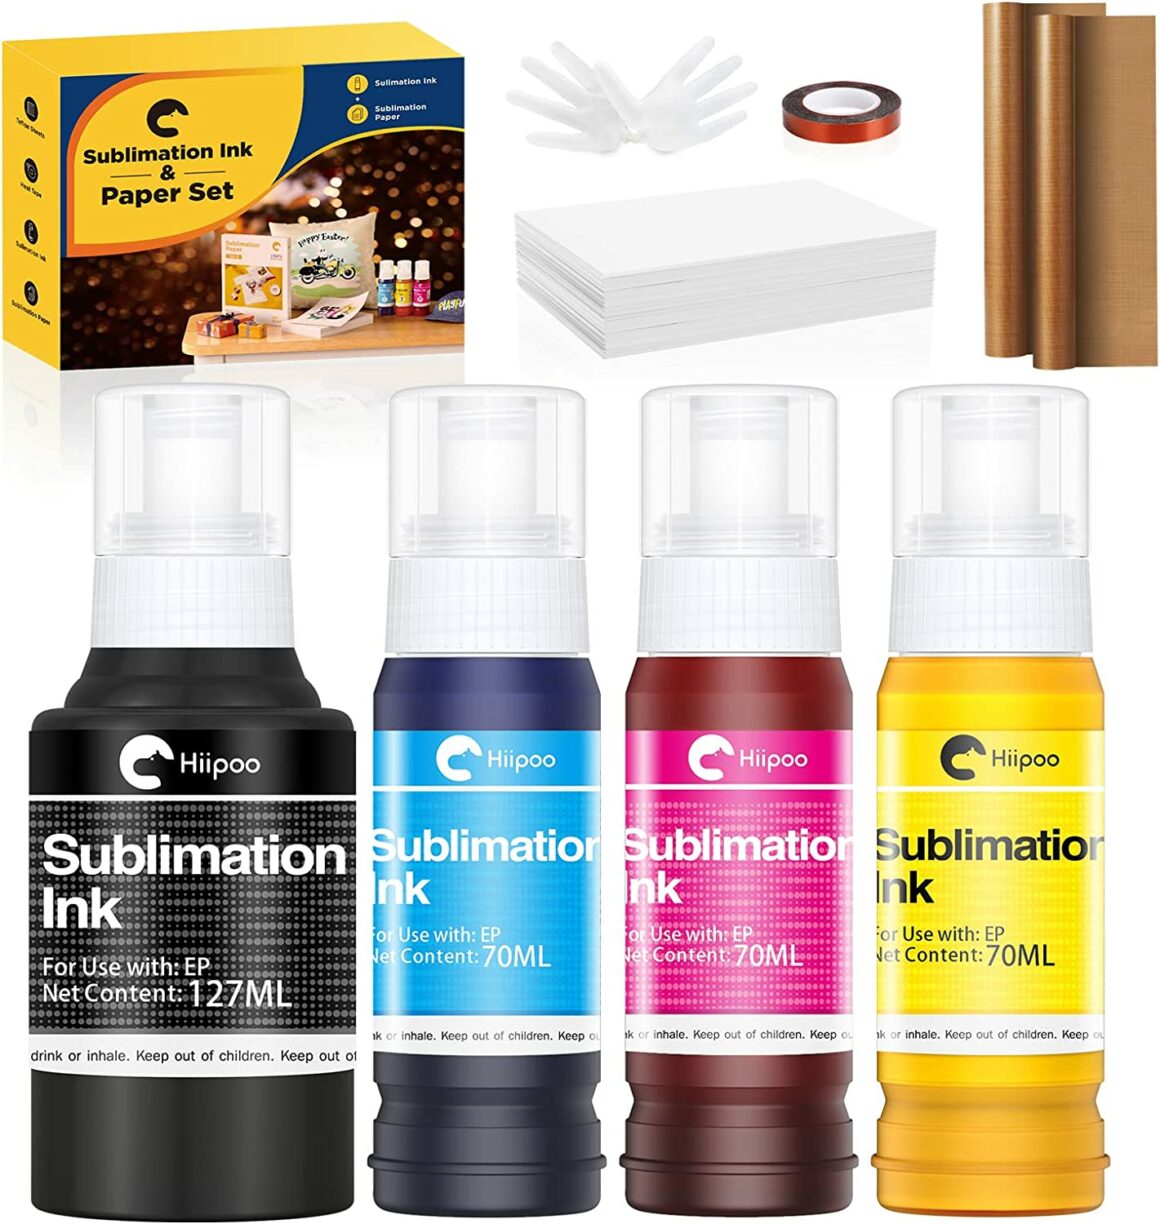 Hiipoo-Sublimation-Ink-Set-with-110-Sheet-Sublimation-Paper-8.5x11-125G-2-Pack-Teflon-Sheet-Heat-Tape-for-EcoTank-Inkjet-Printer-ET-2720-ET-2760-ET-2800